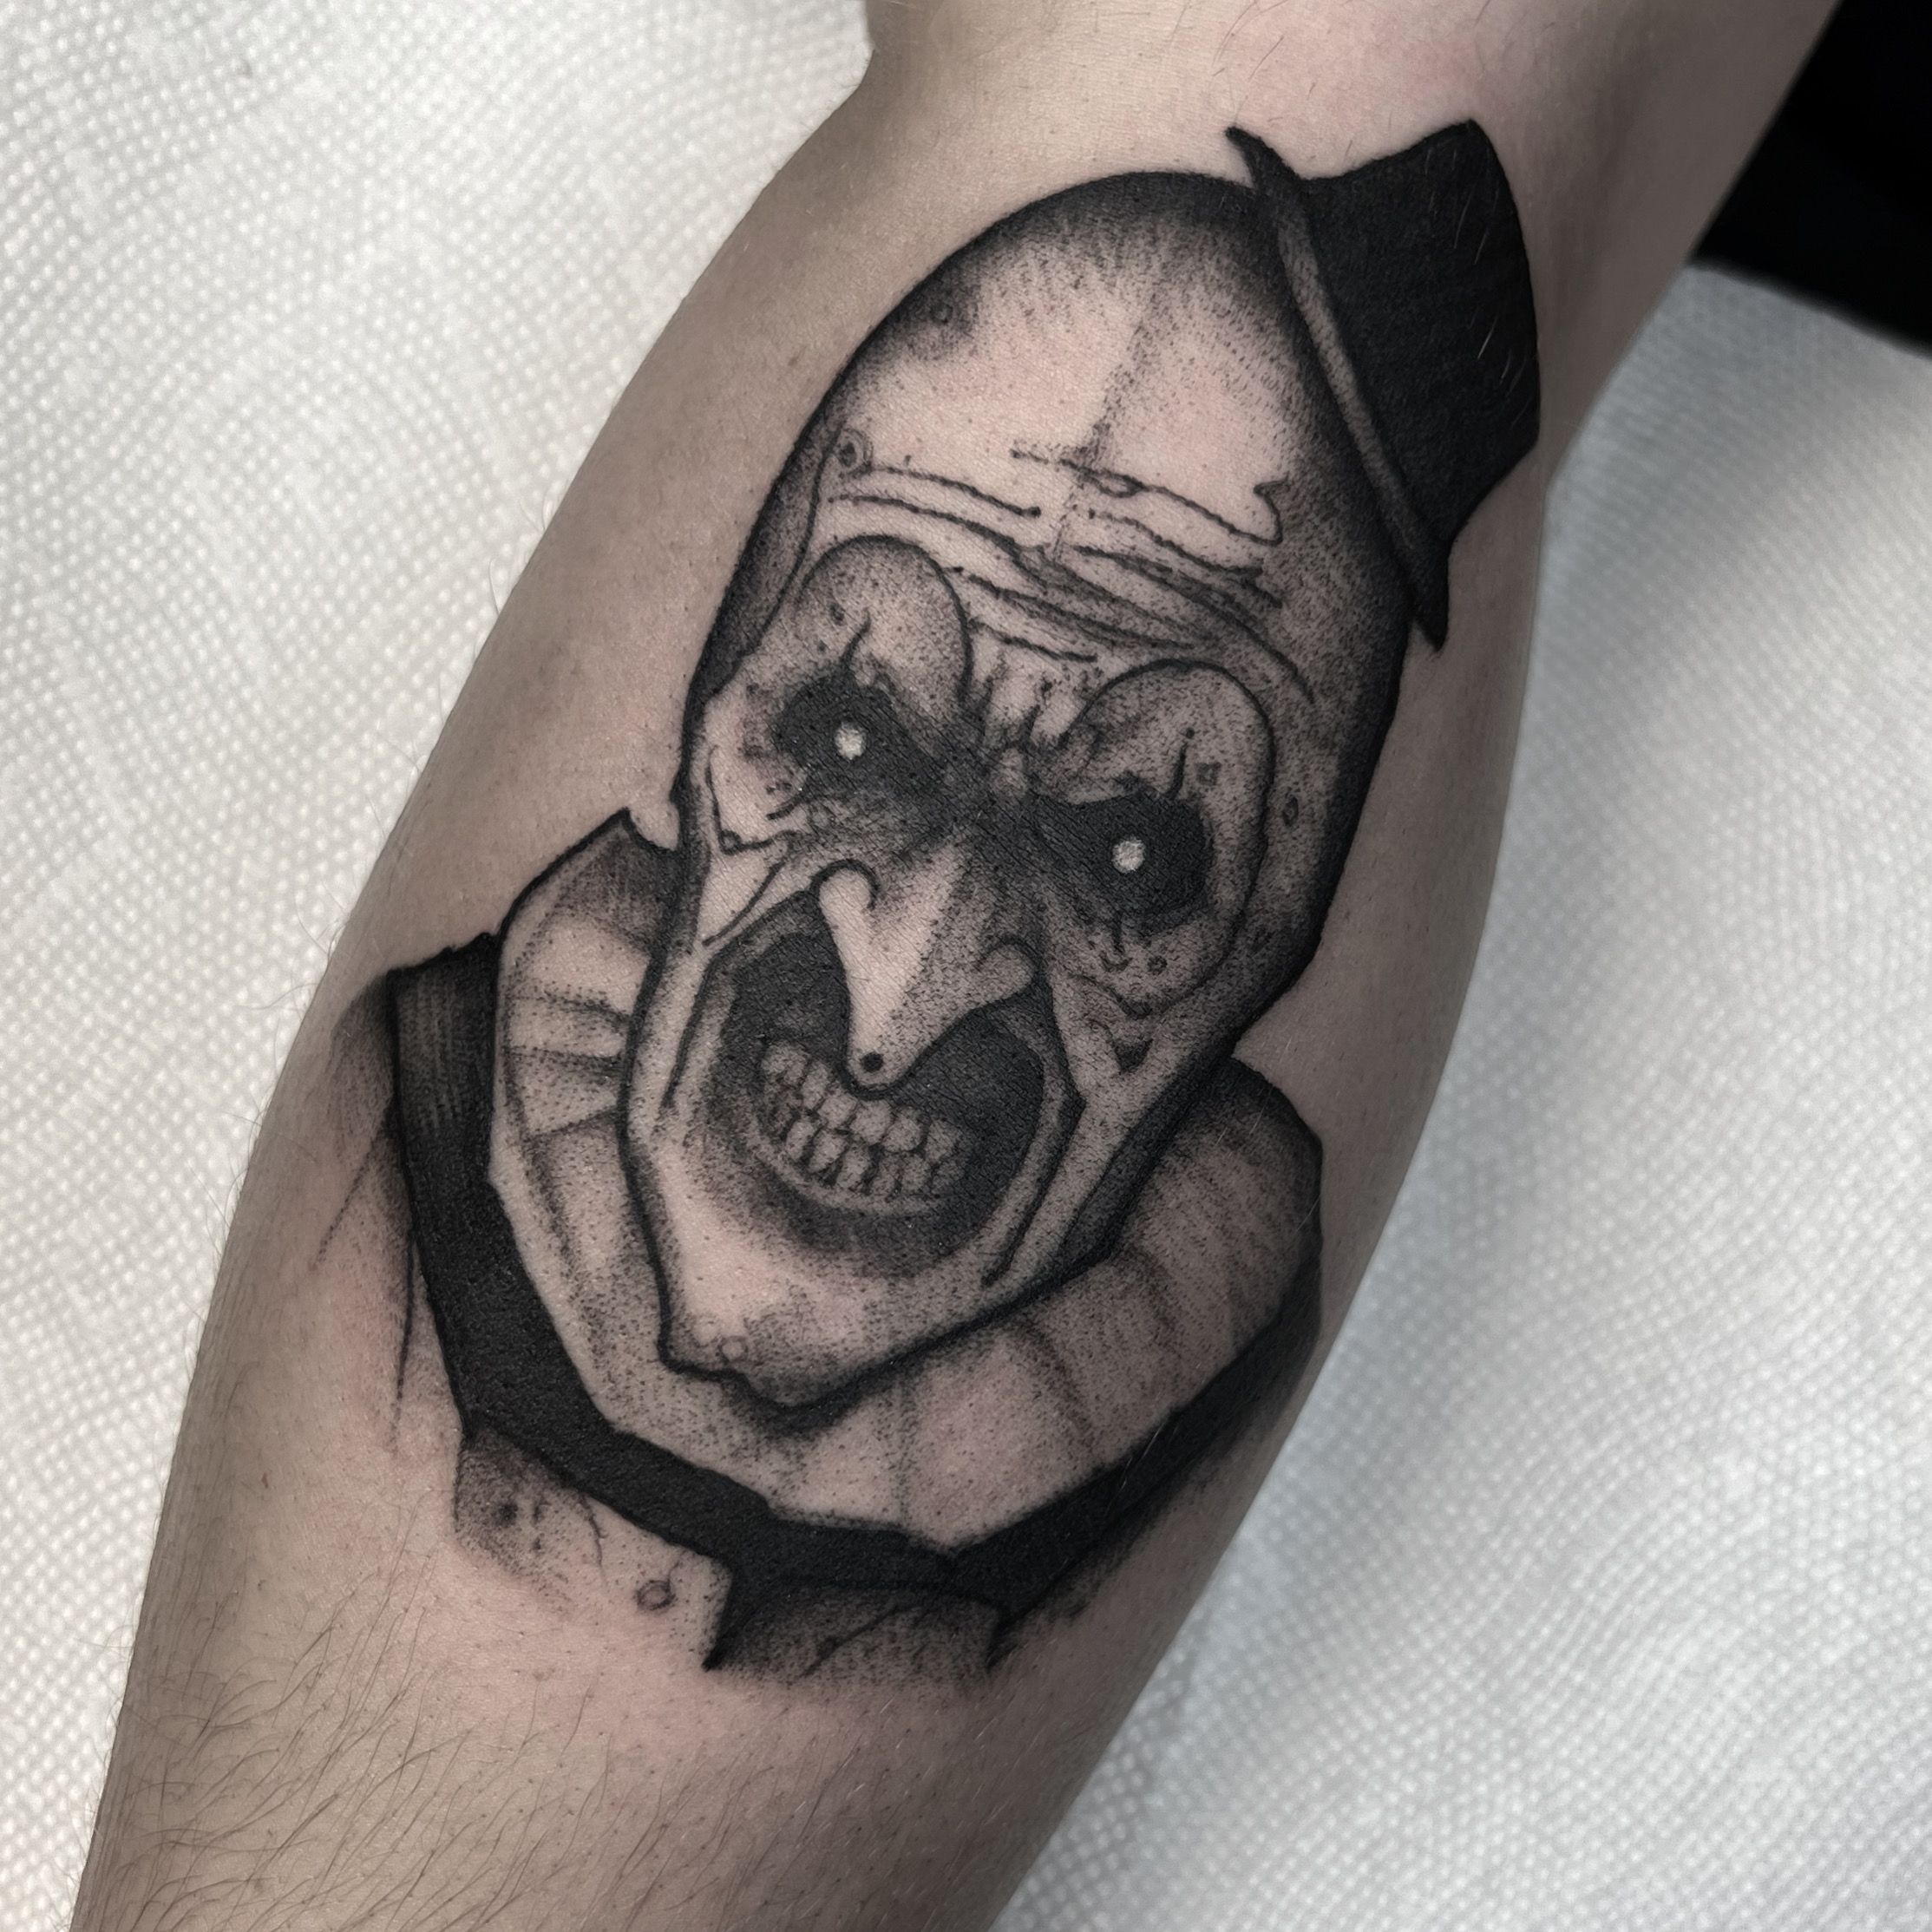 Art the Clown Tattoo  Album on Imgur